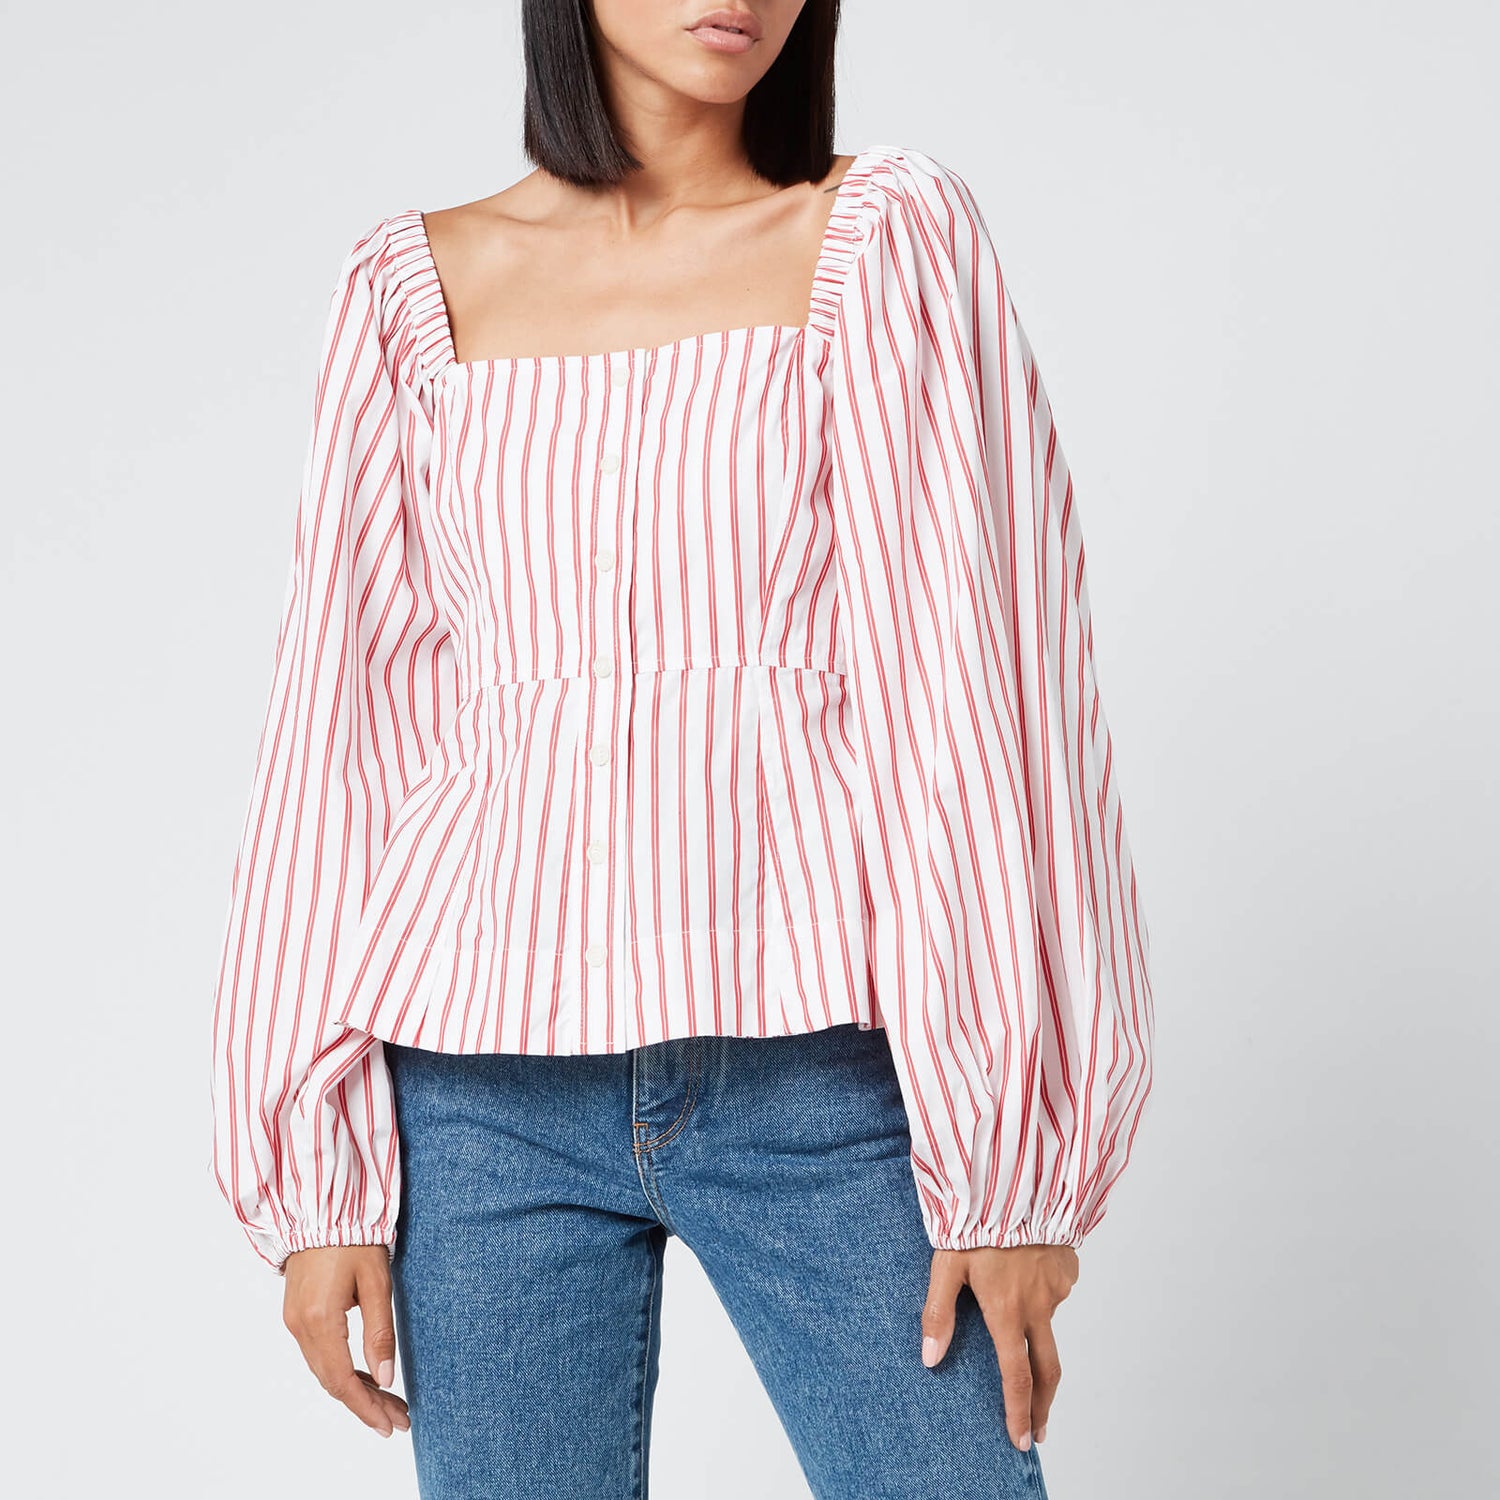 Ganni Women's Stripe Cotton Shirt - Lollipop - Free UK Delivery Available